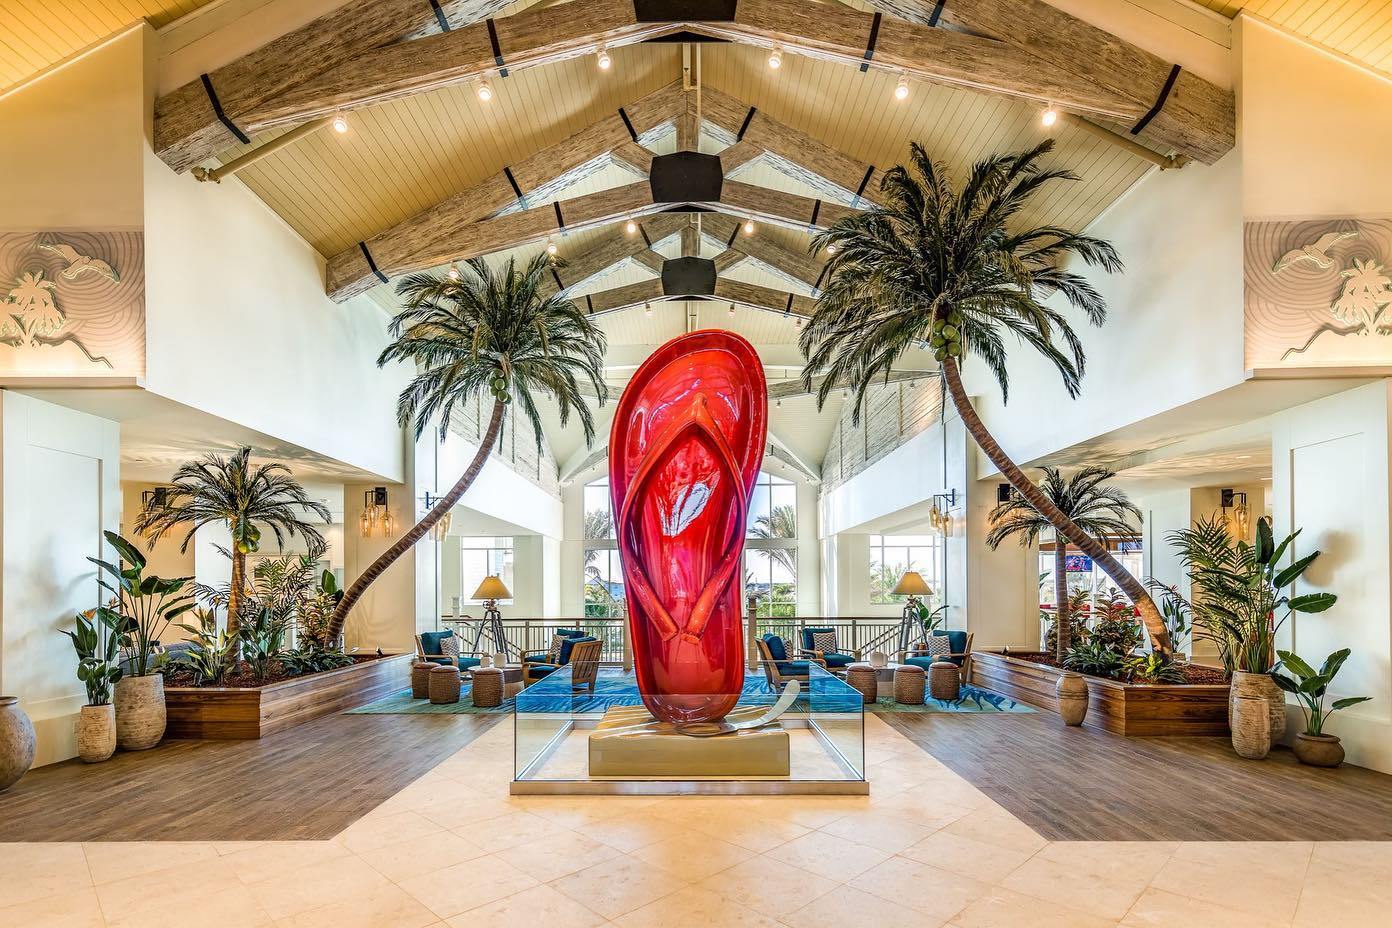 The Falcone Group developed the Margaritaville Orlando Resort Hotel near Walt Disney World.